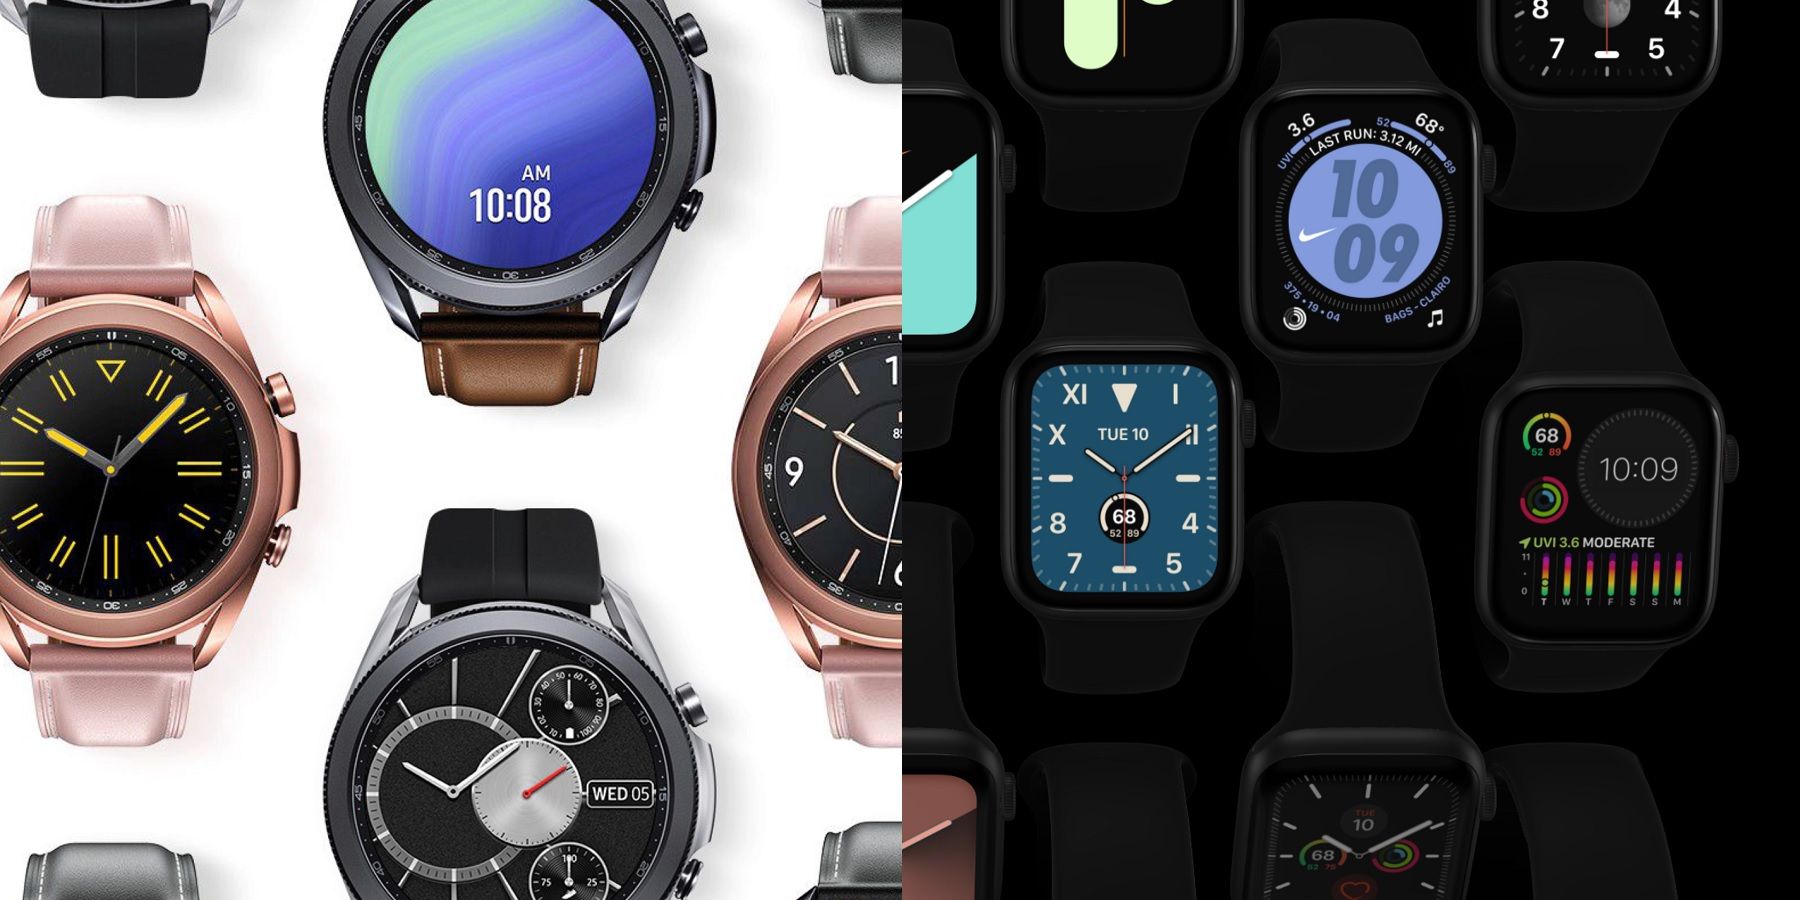 Samsung Galaxy Watch 3 Vs. Apple Watch 5: The Best Smartwatch To Buy?